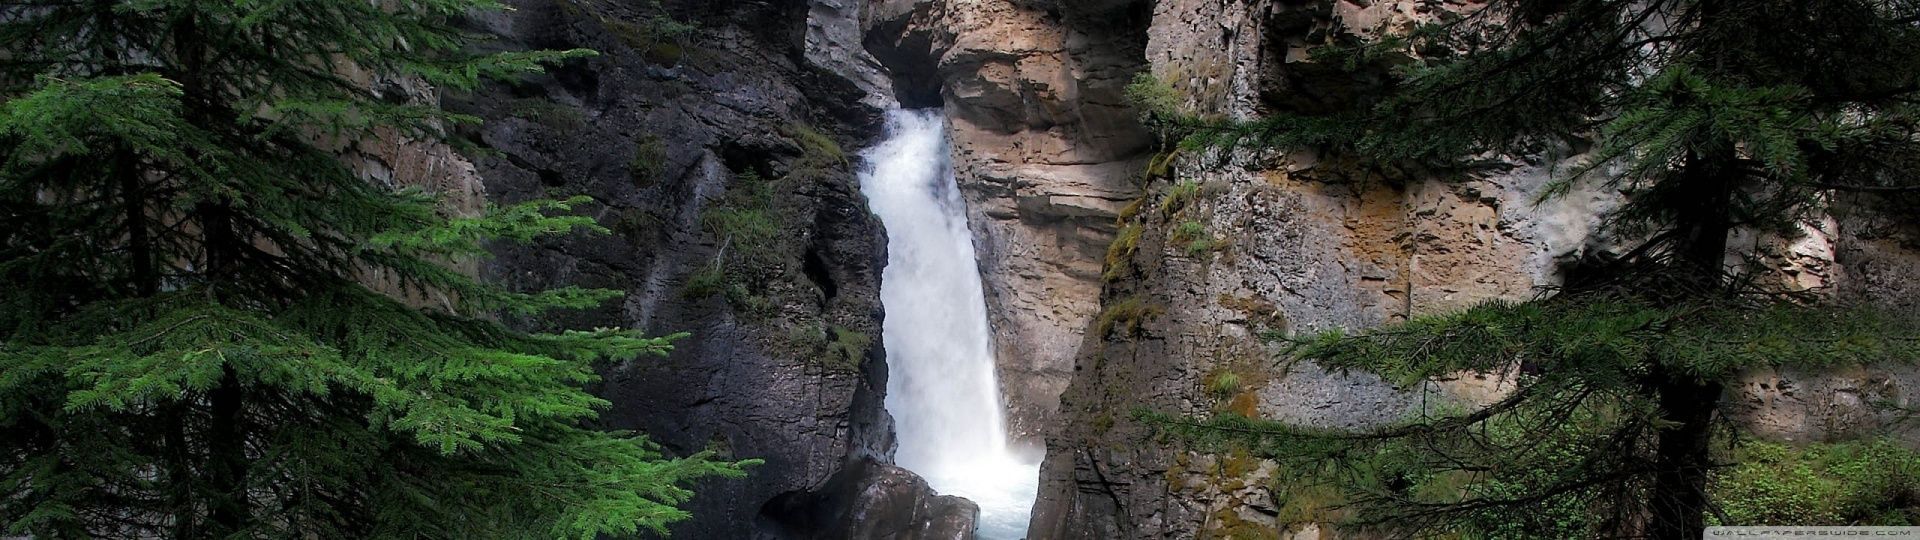 Mountain Waterfall HD desktop wallpaper : High Definition ...